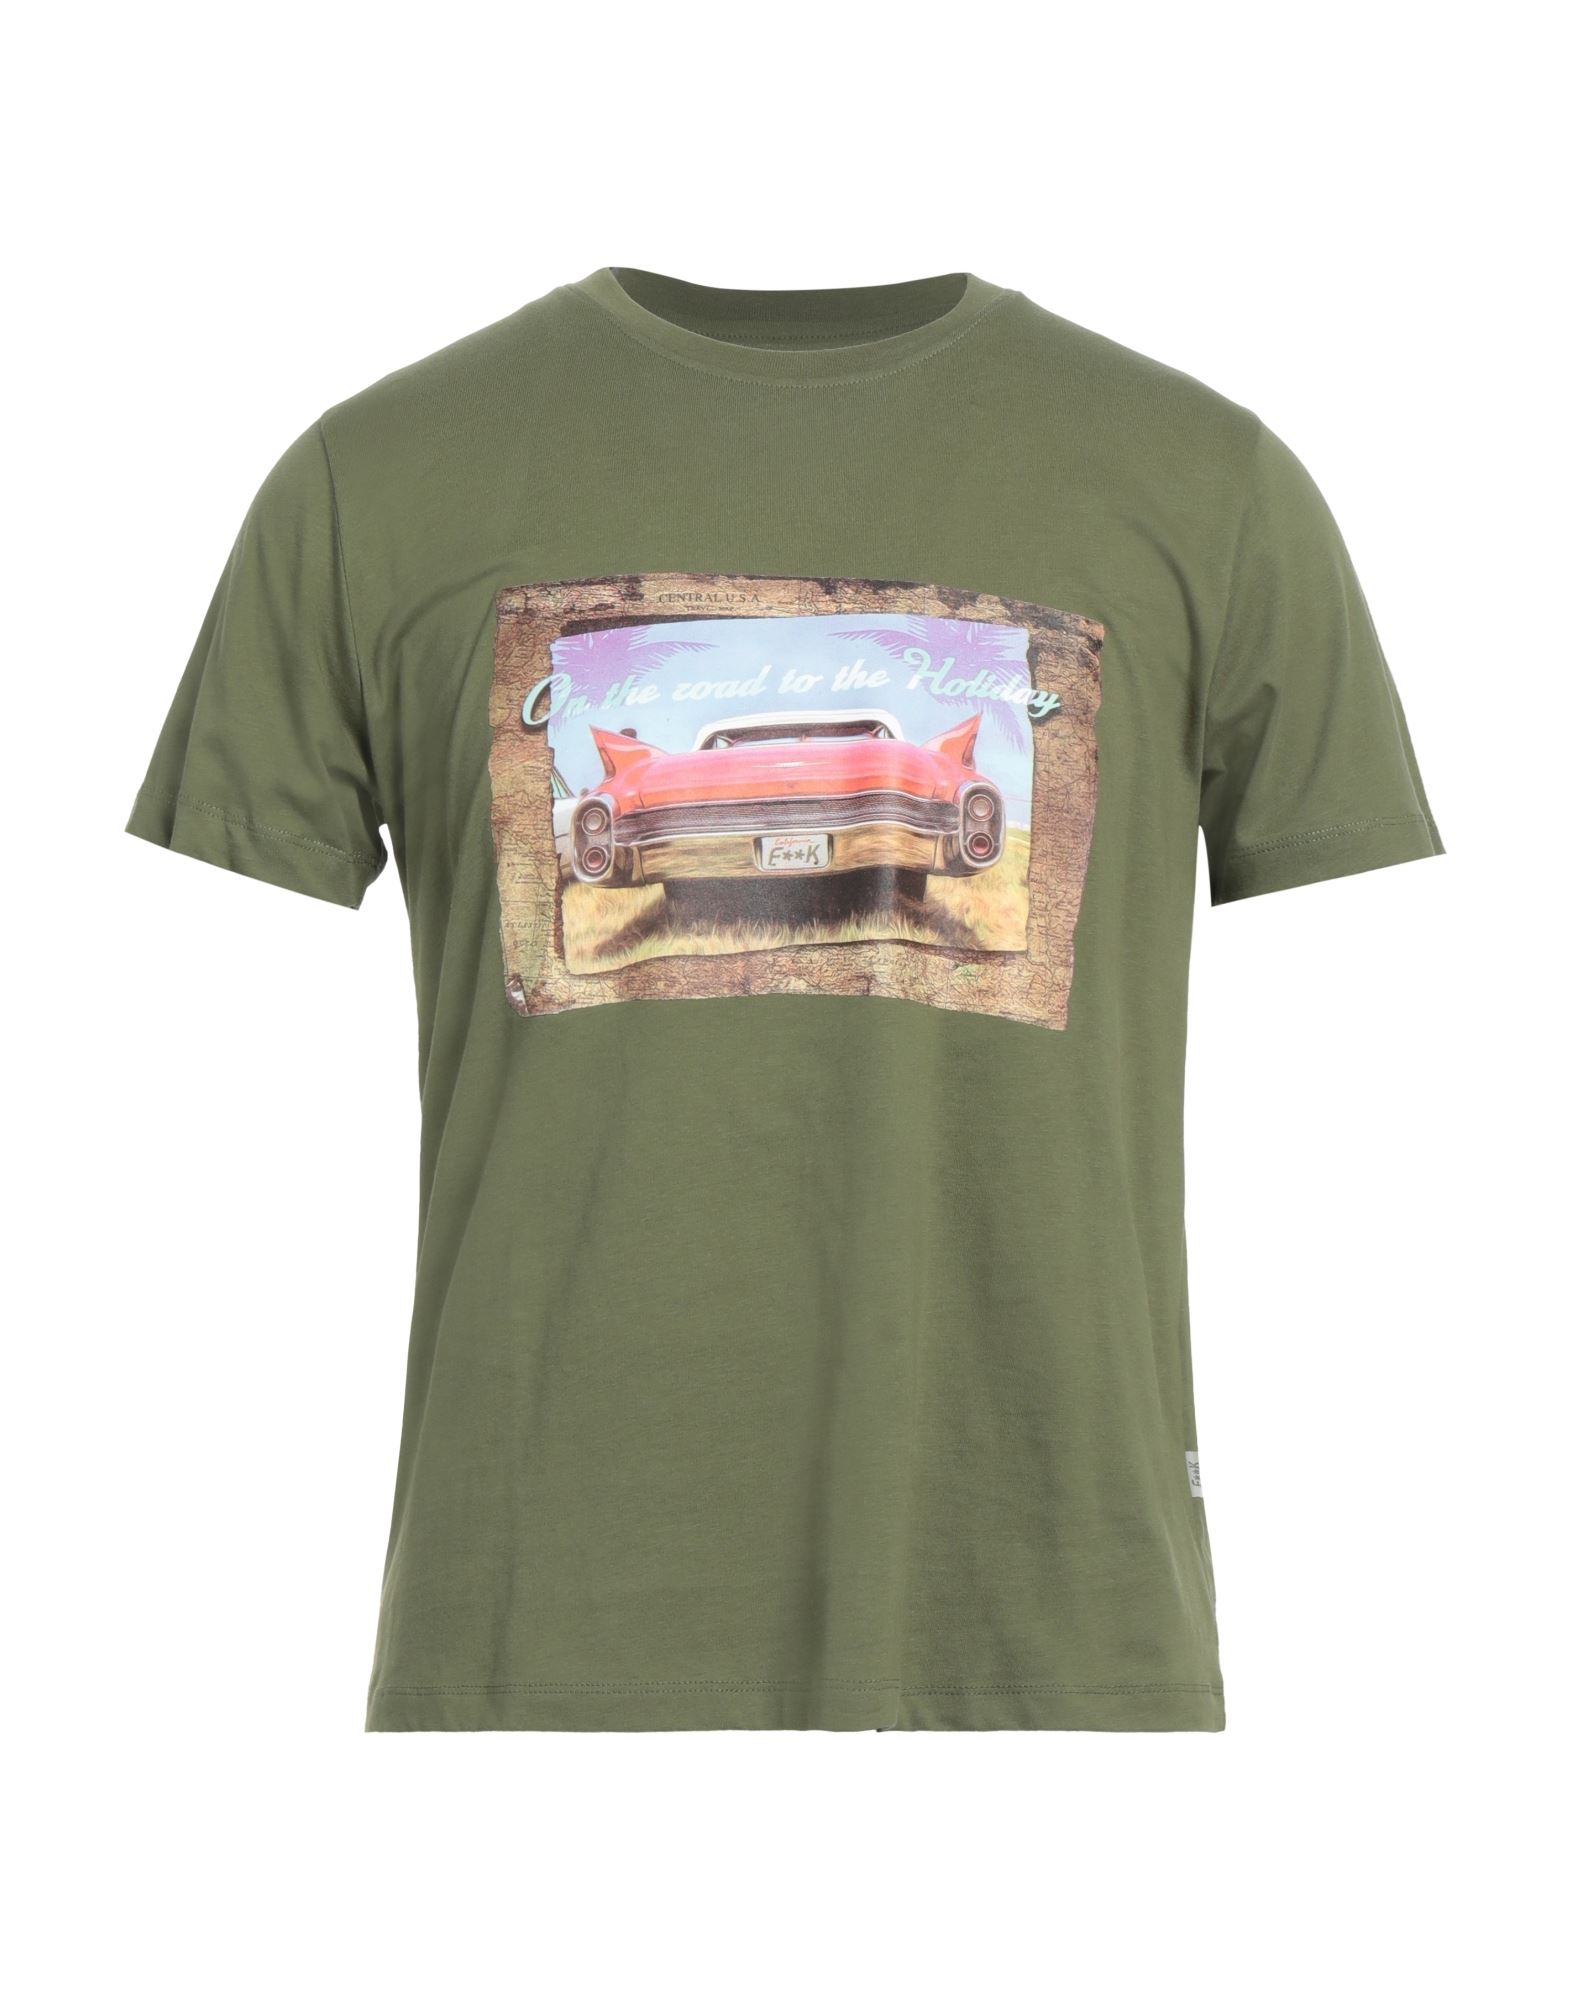 F**k Project Man T-shirt Military Green Size Xs Cotton